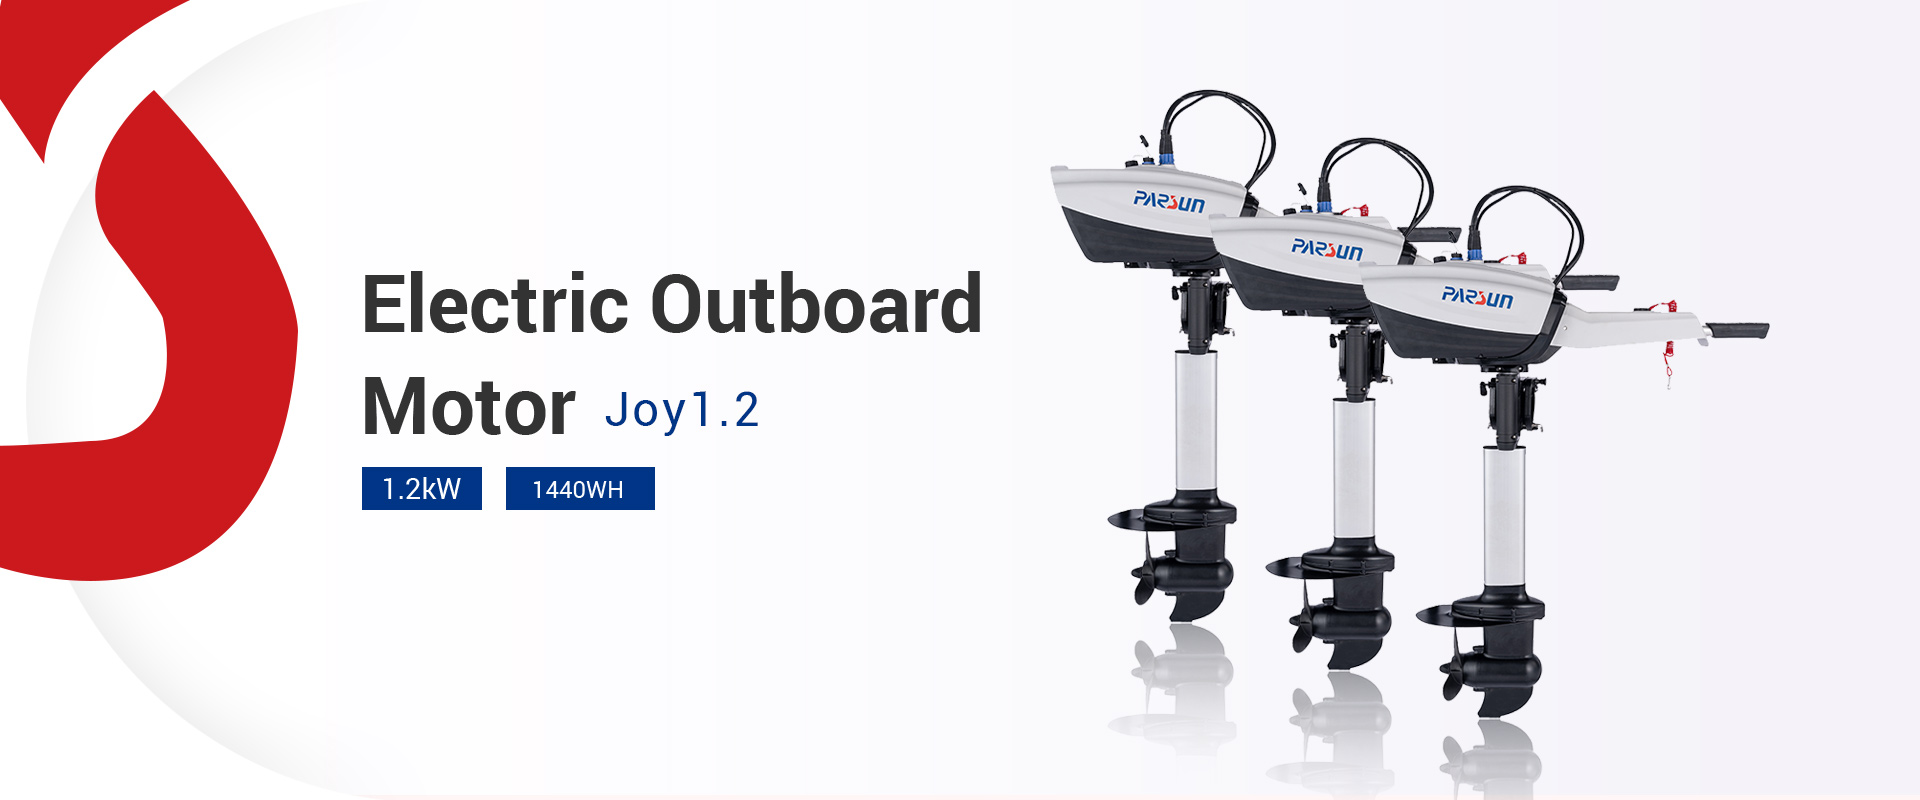 Electric Outboard Motor Joy1.2